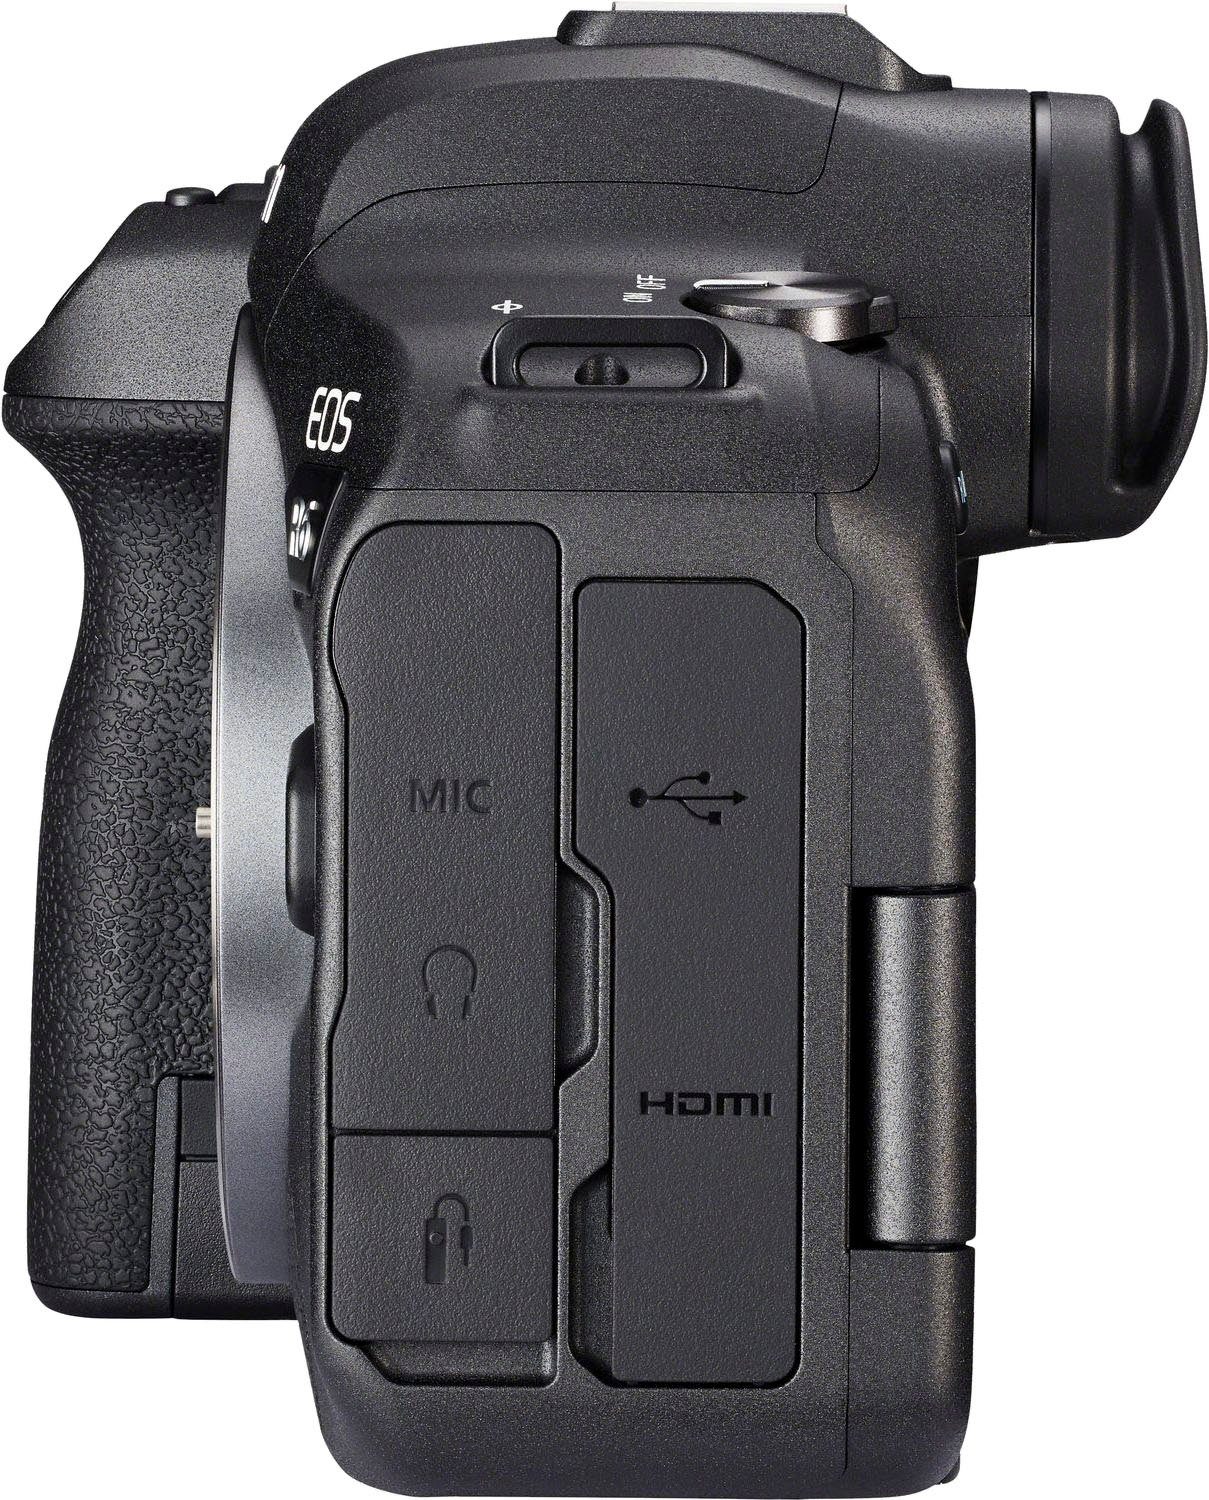 Canon EOS R6 Body (Gehäuse) MP, Systemkamera Bluetooth, WLAN (20,1 (WiFi)